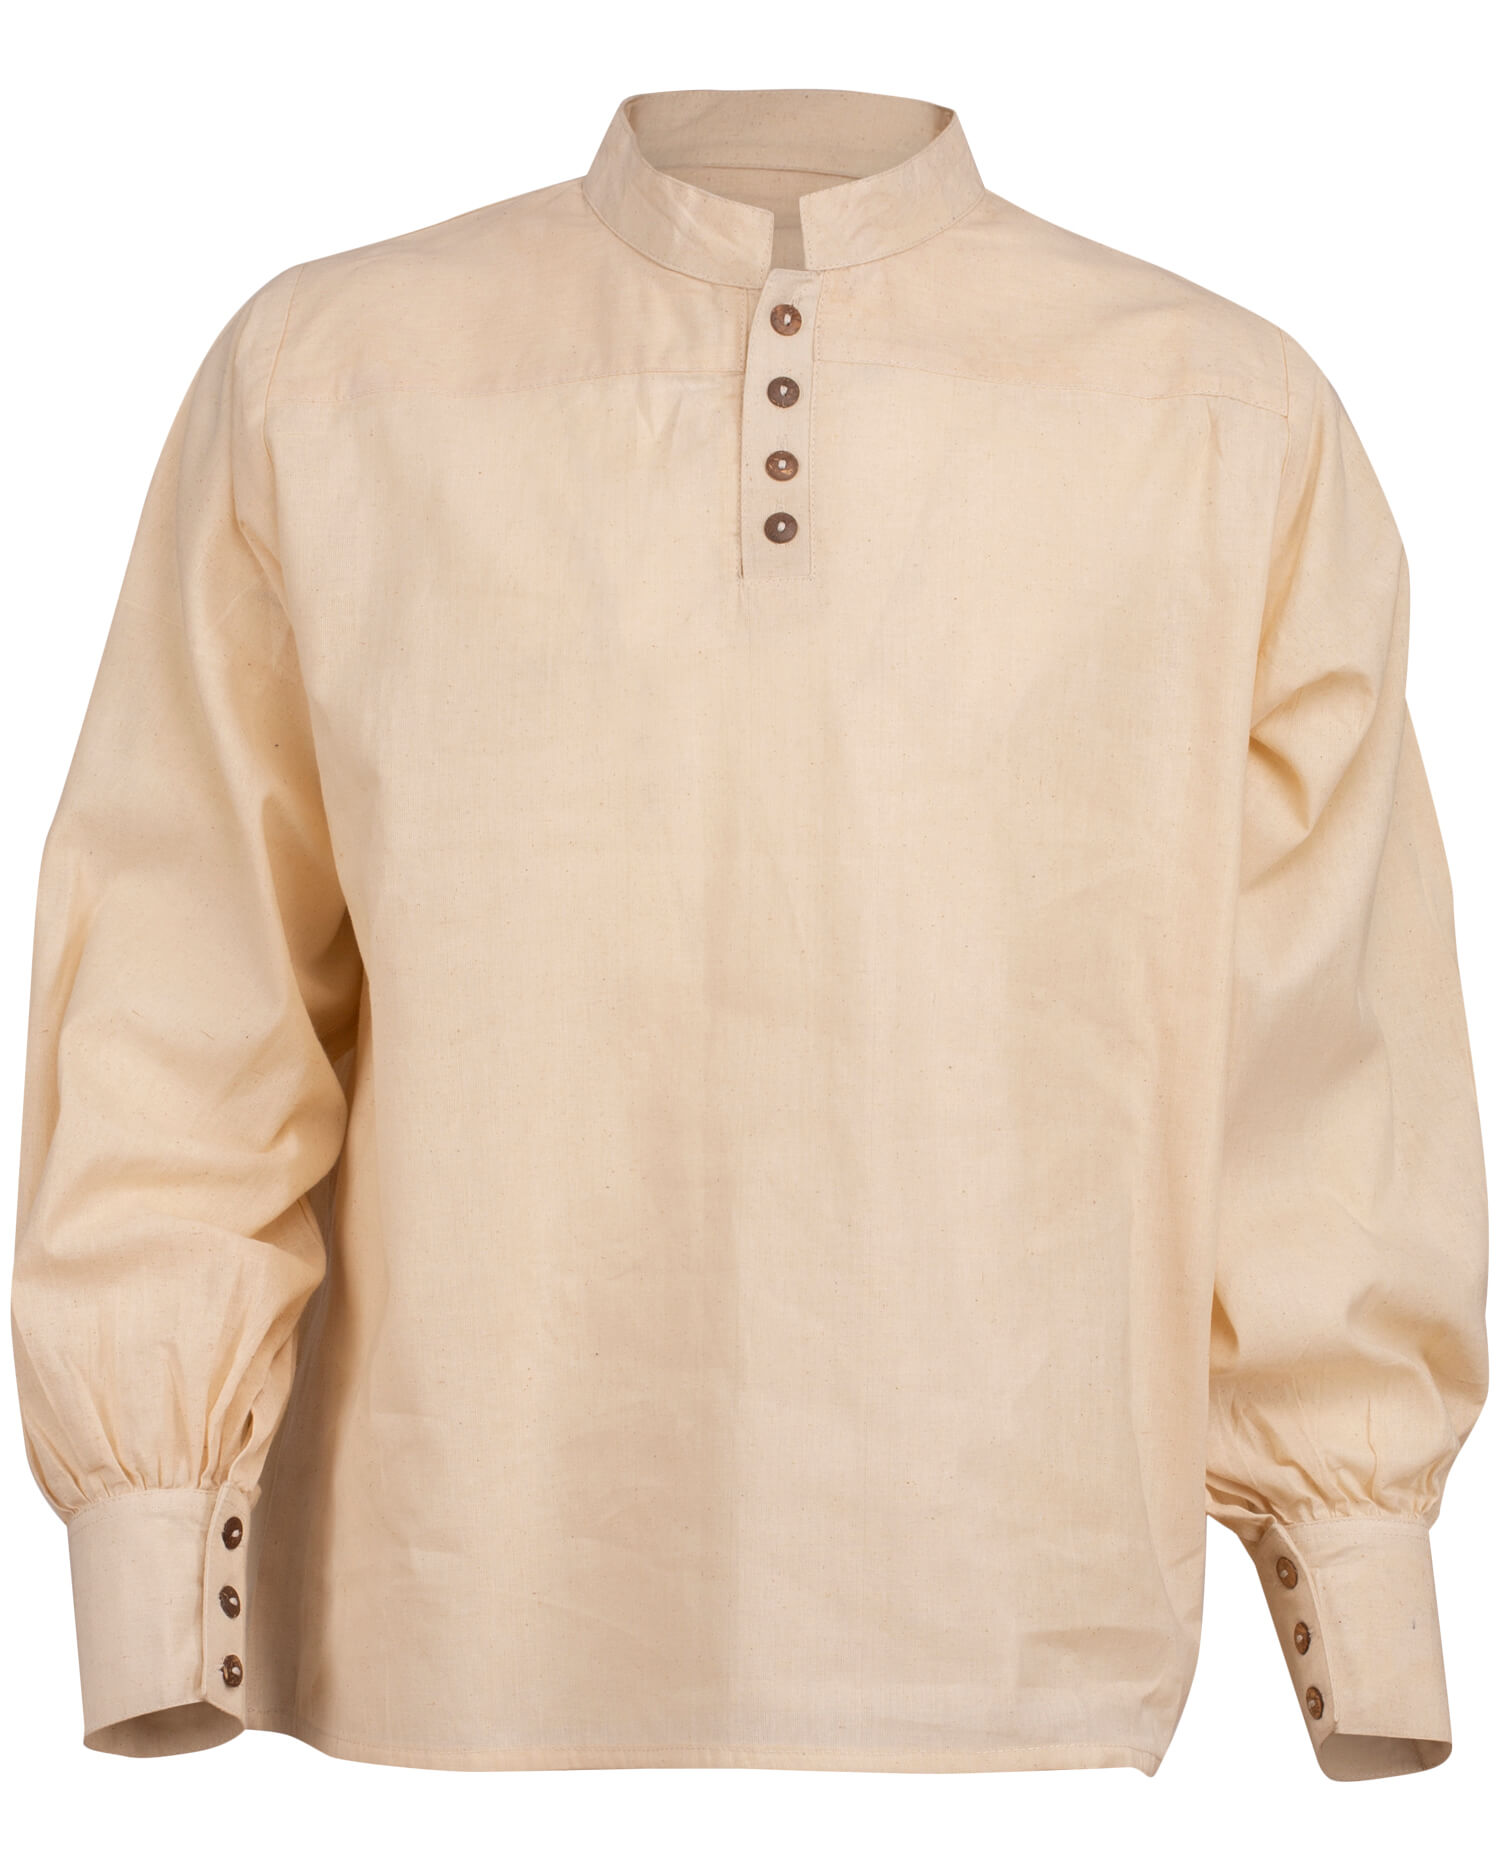 Bartold shirt light cotton